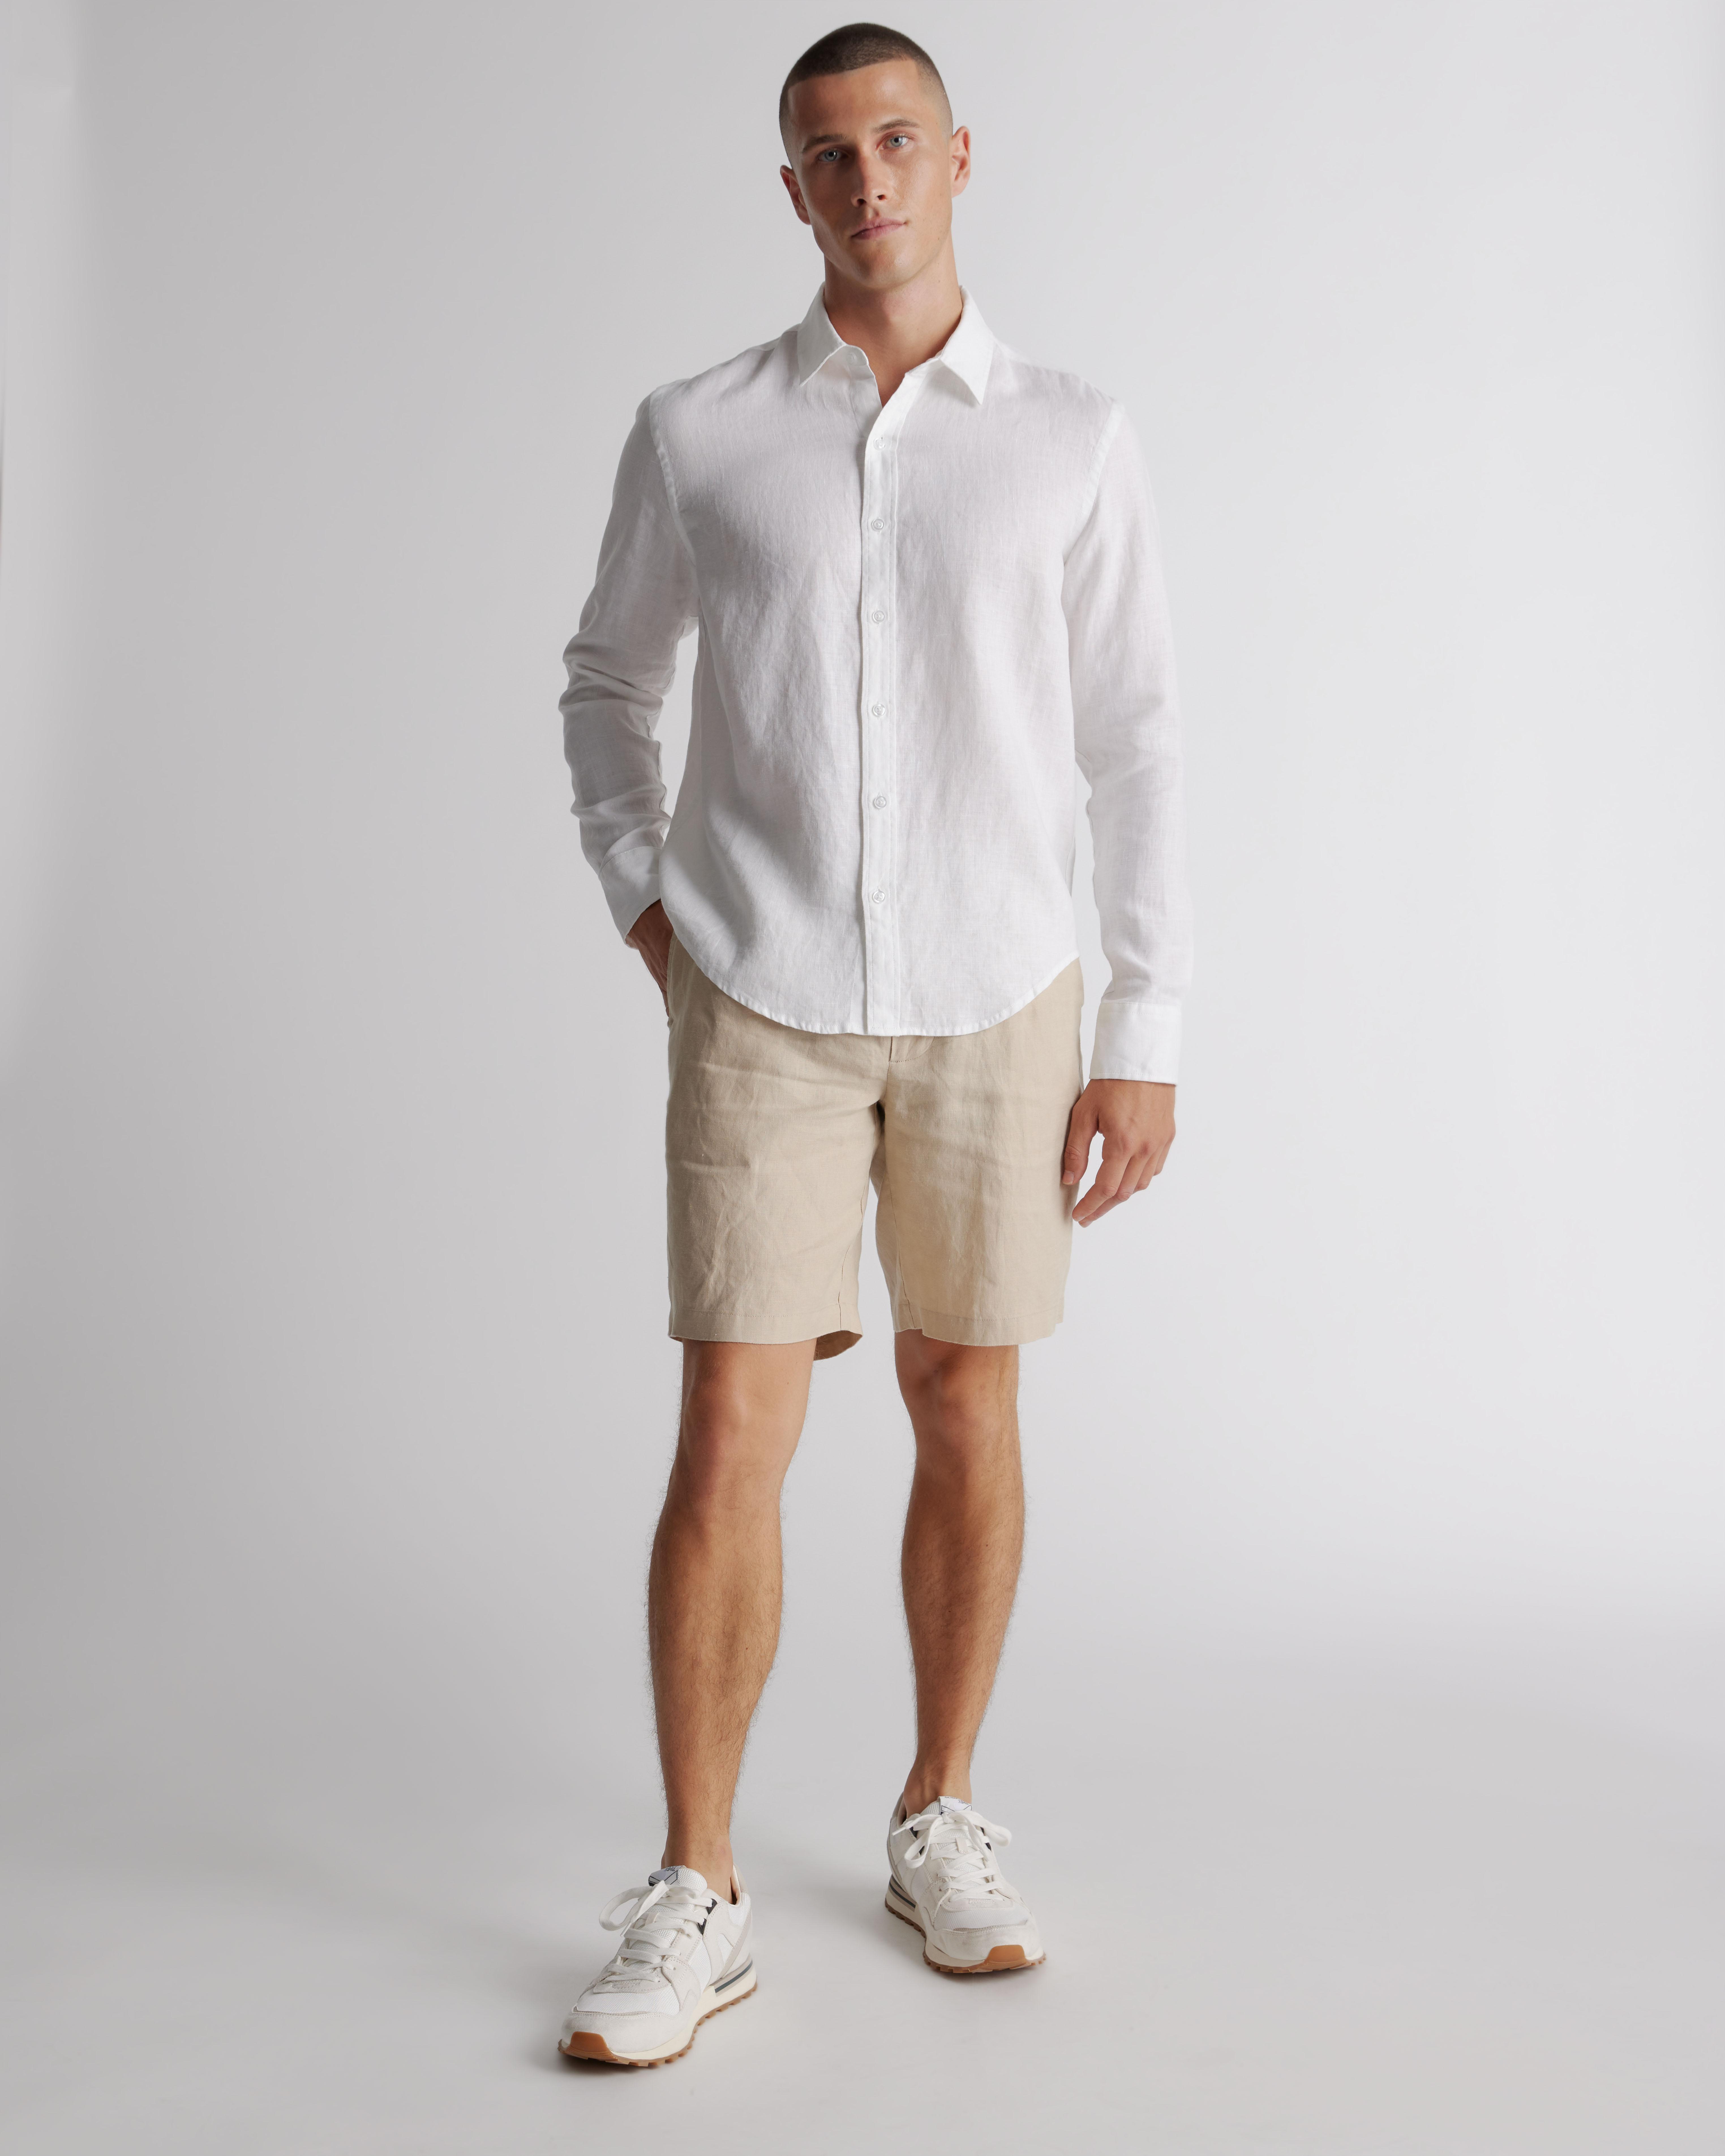 Quince 100% European Linen Long Sleeve Shirt in Gray for Men